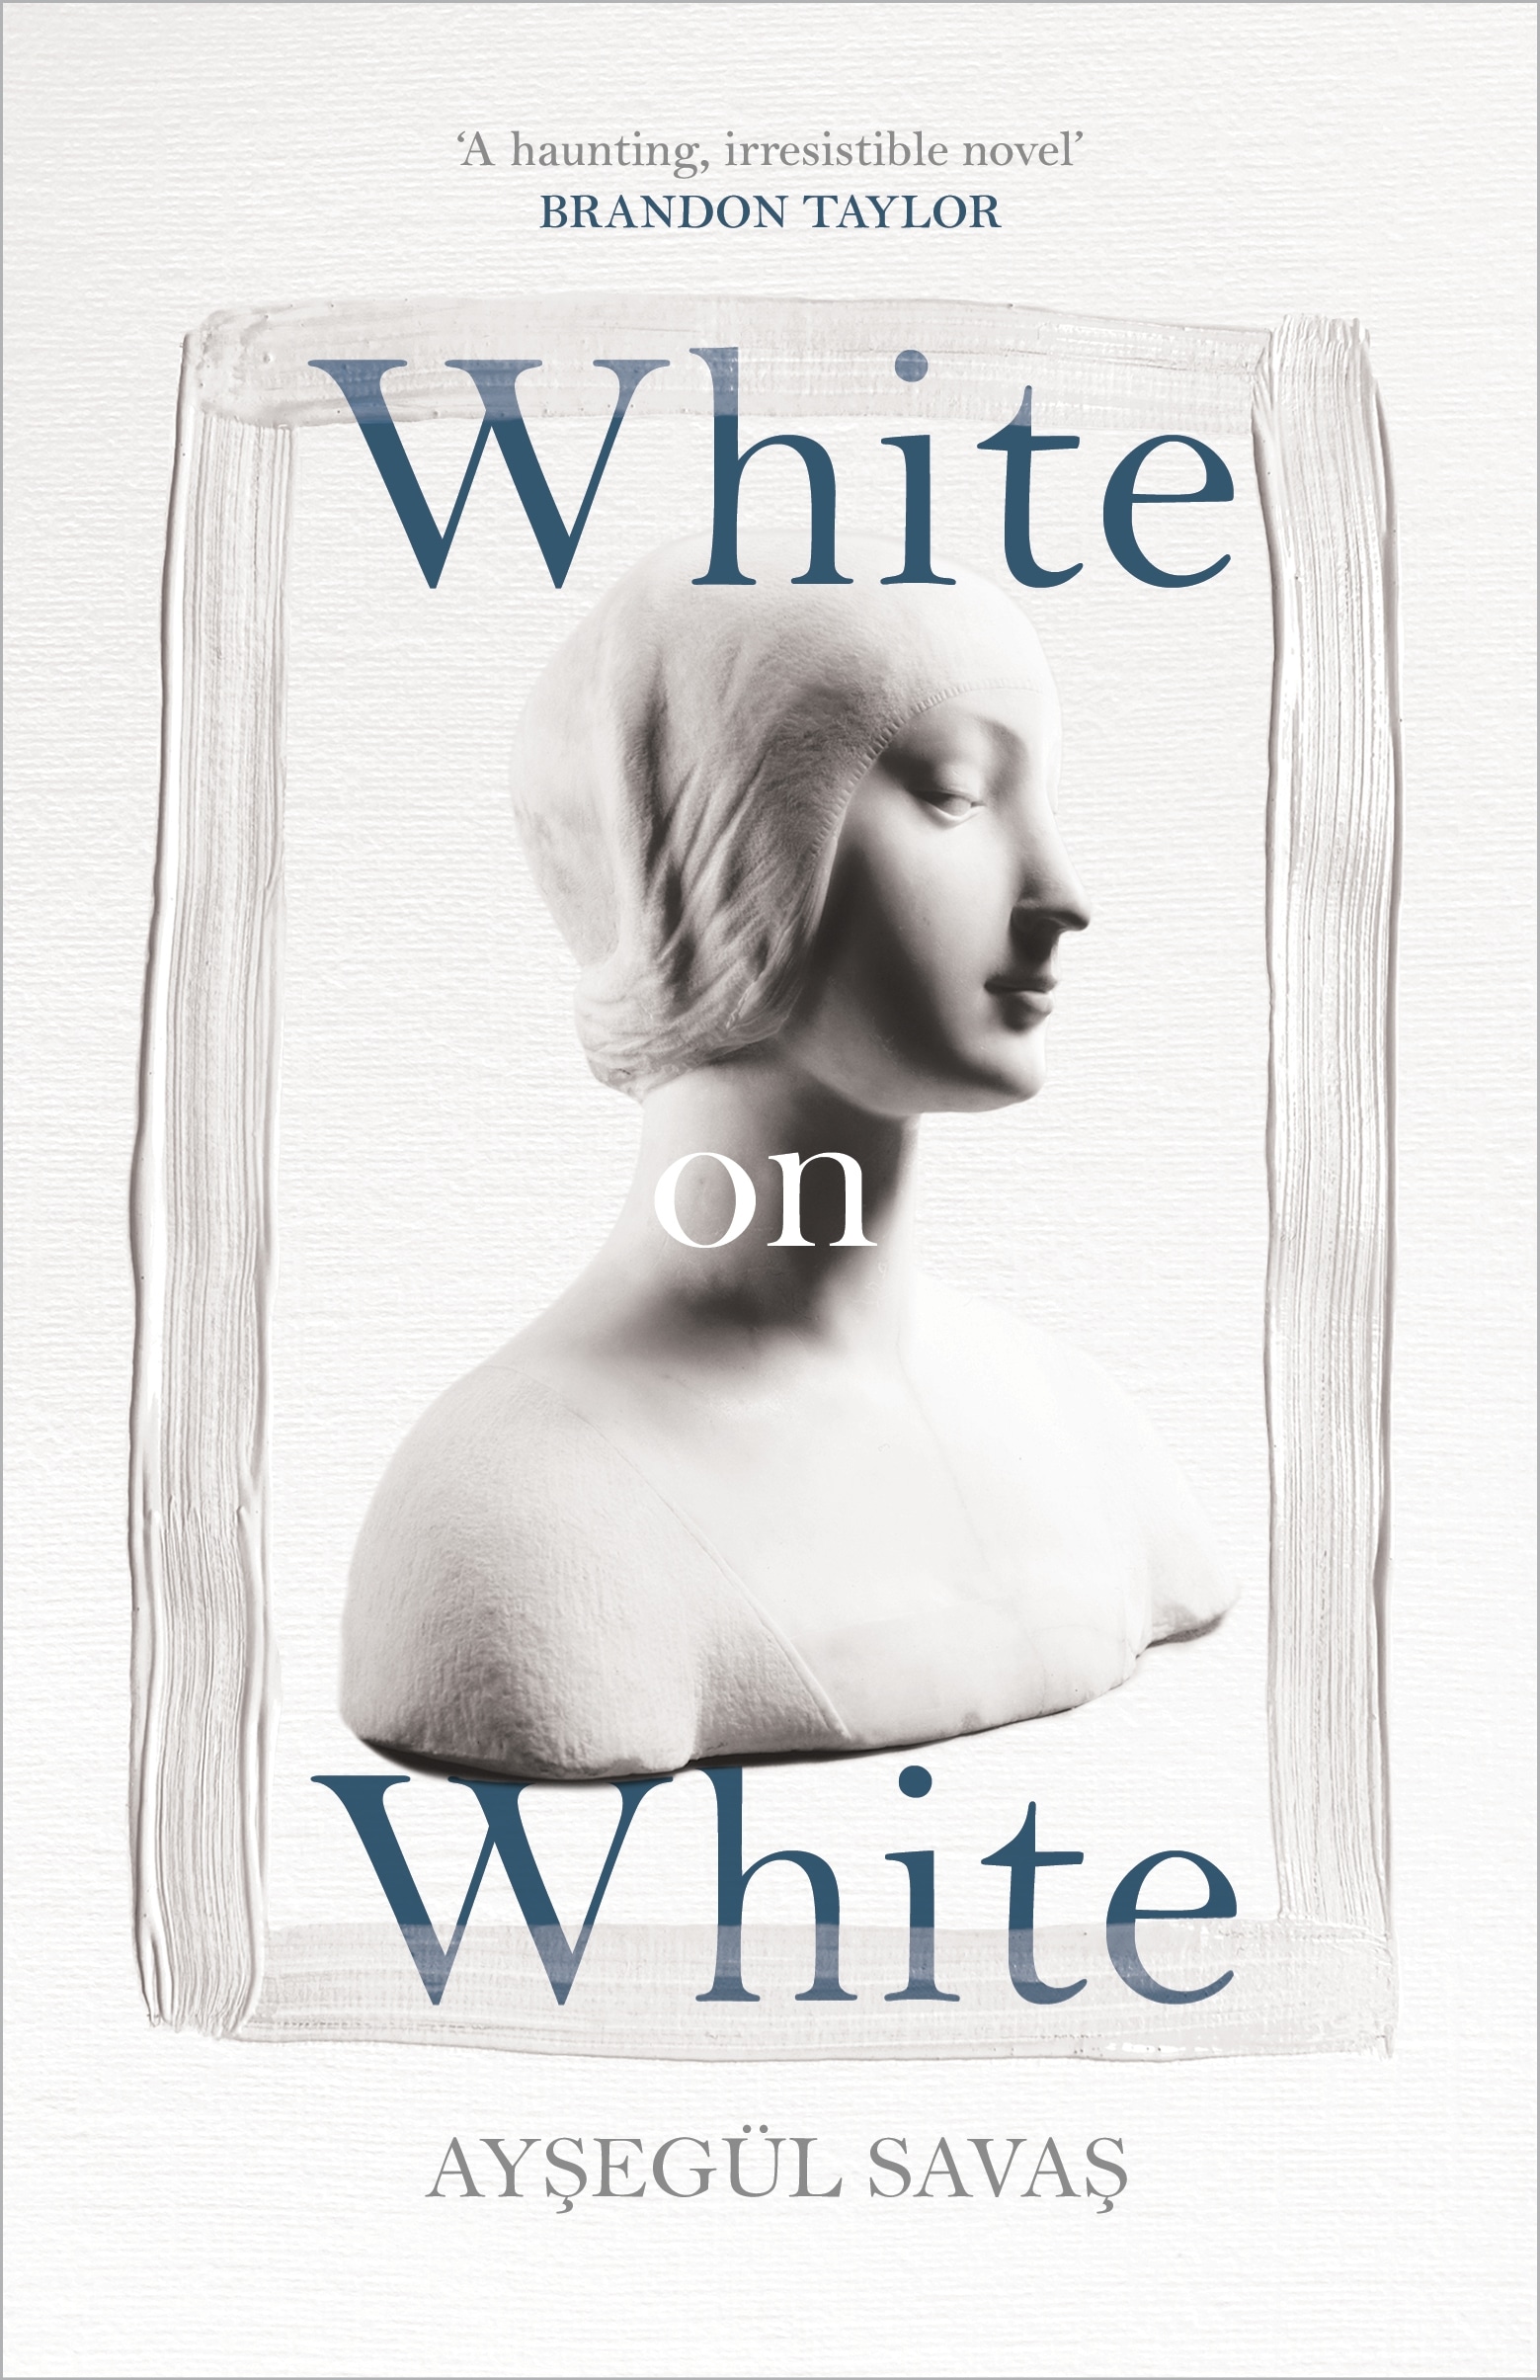 Book “White on White” by Aysegül Savas — January 20, 2022